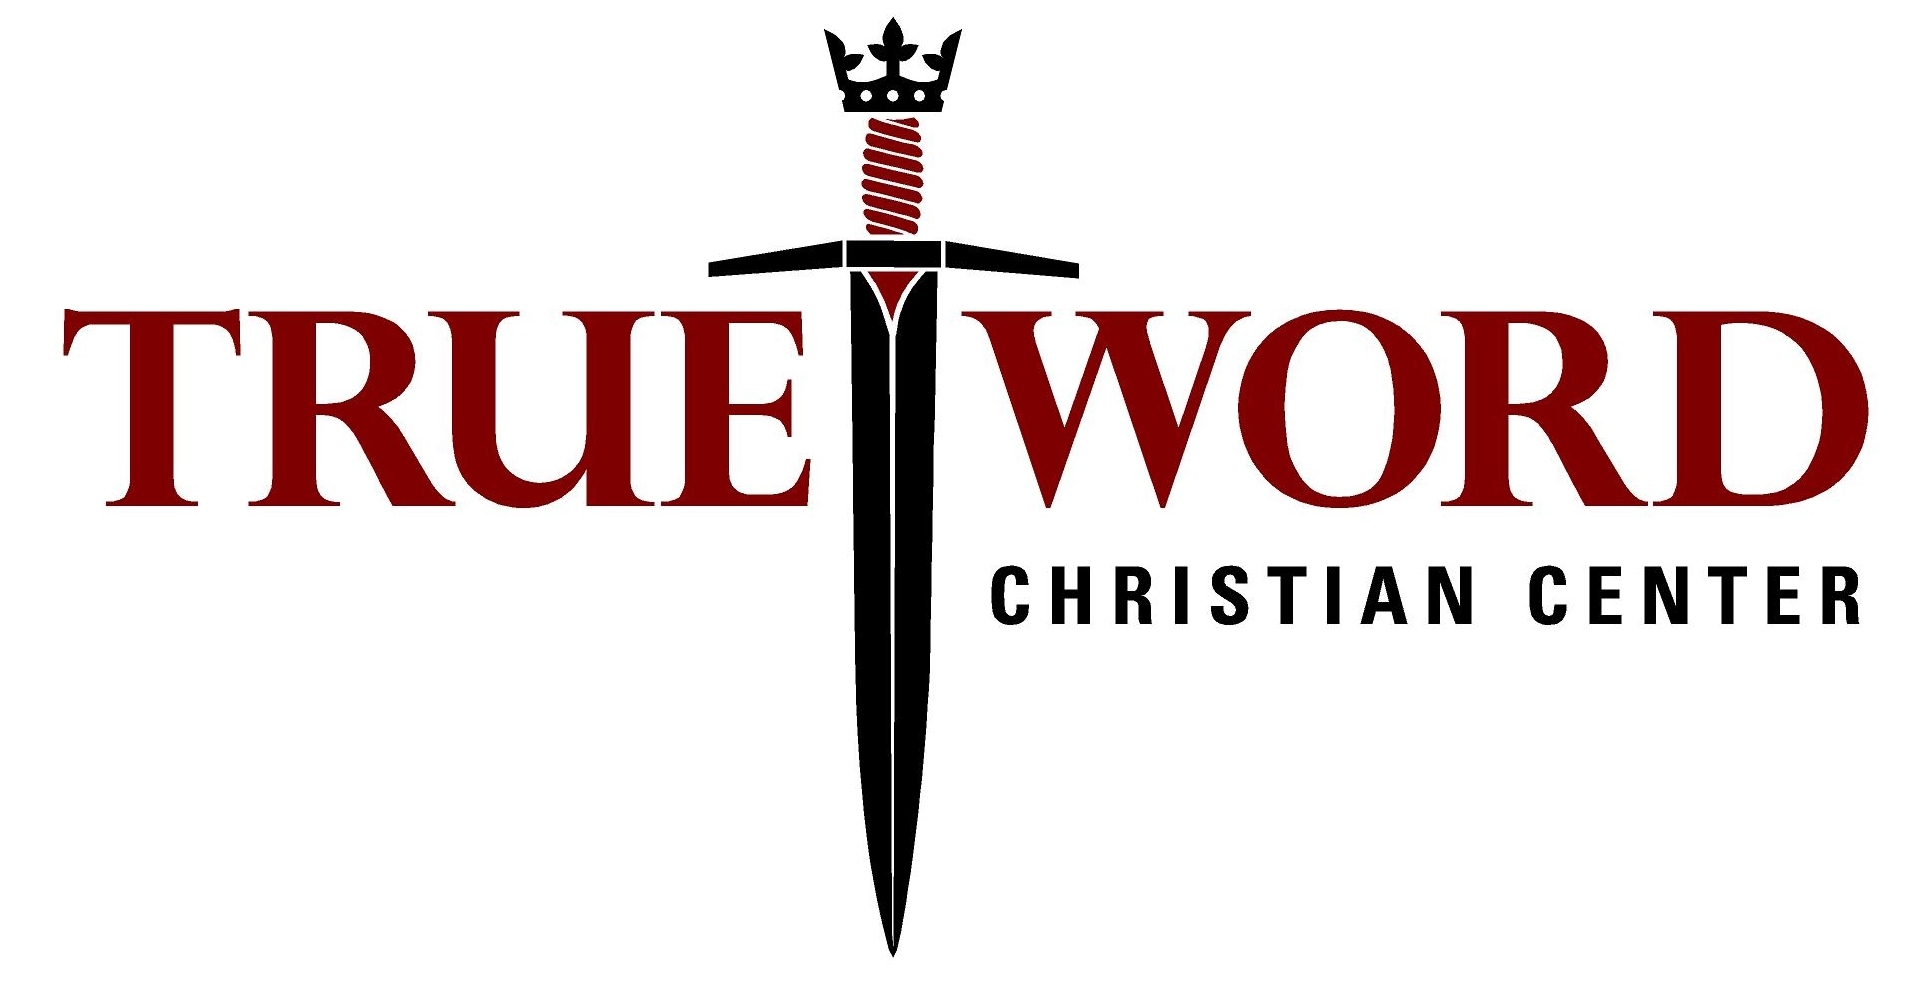 True Word Christian Center